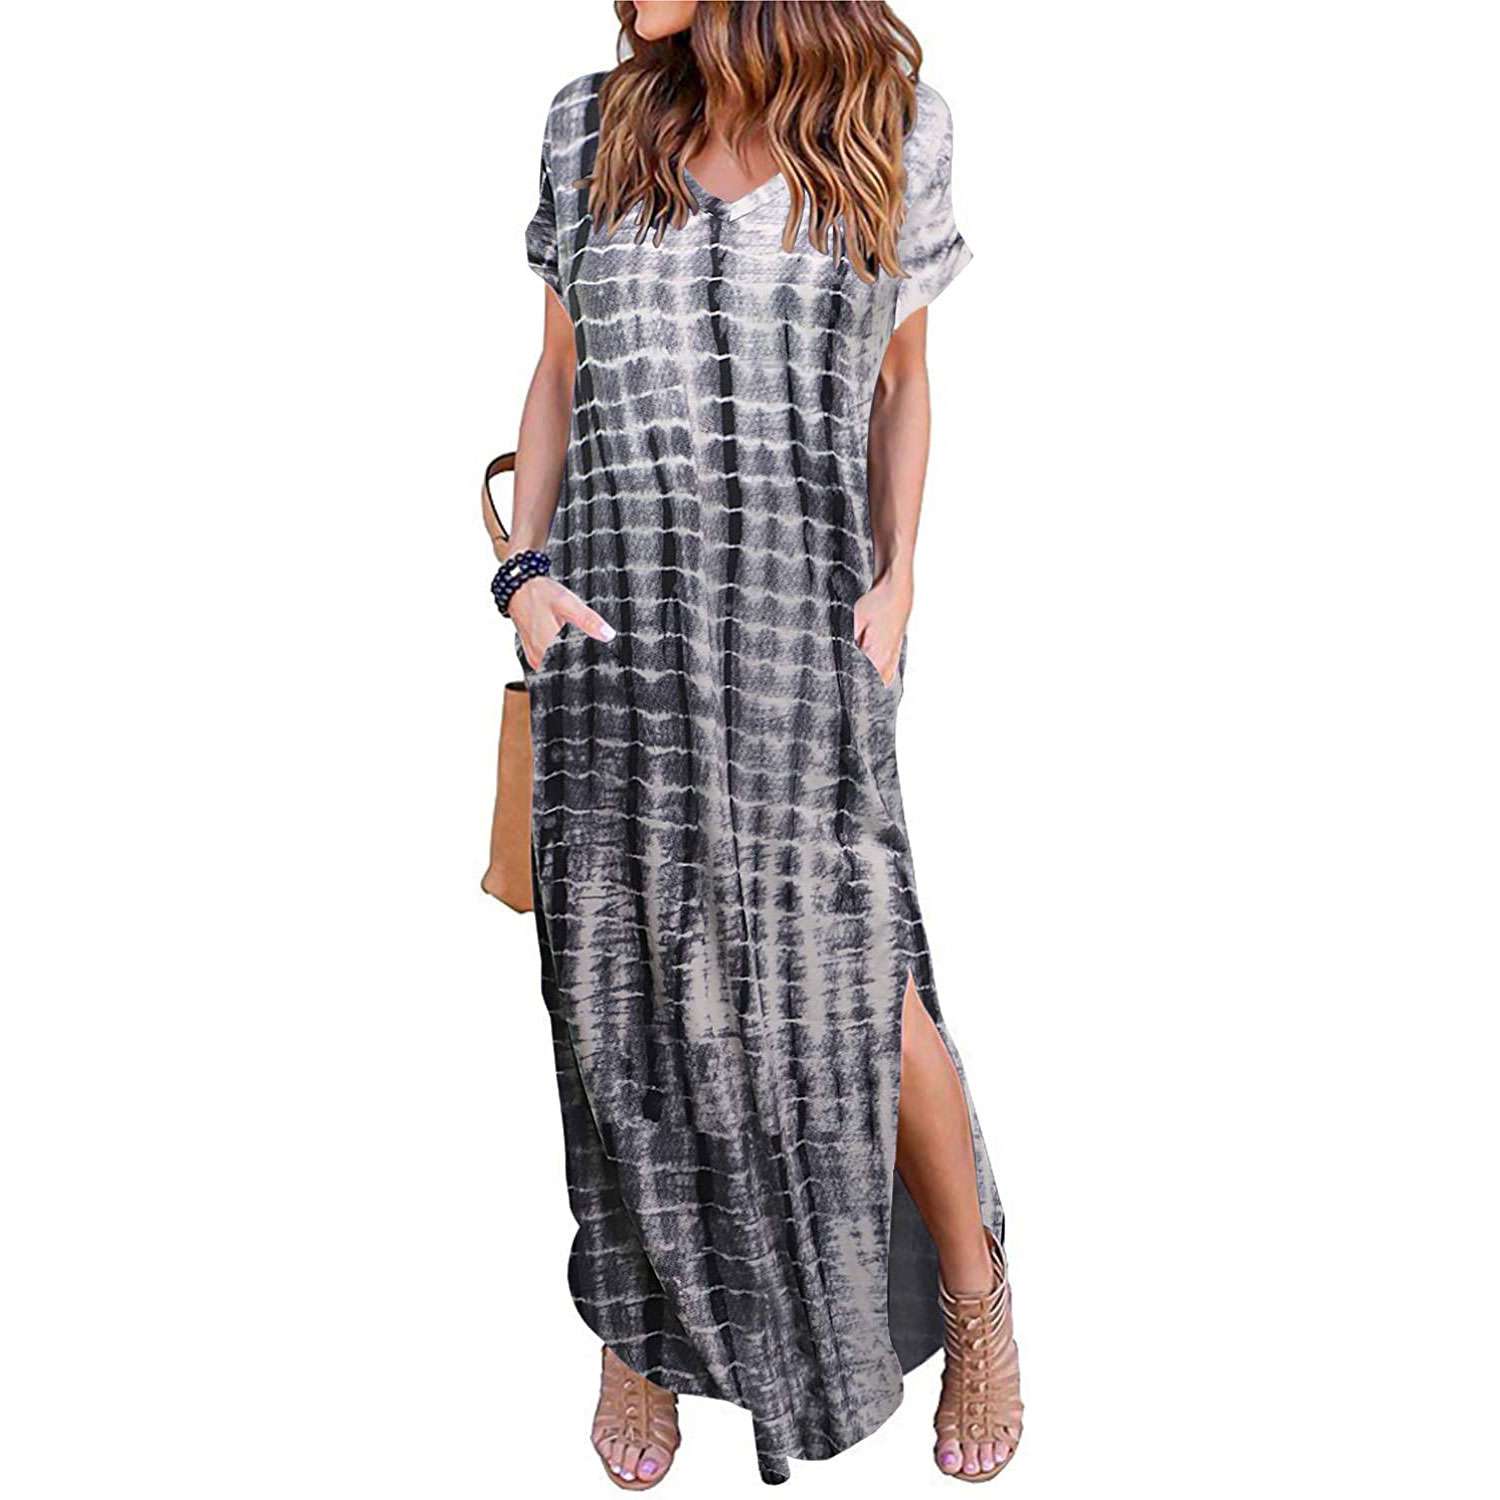 The Huskary Maxi Dress Is Popular on Amazon | PEOPLE.com